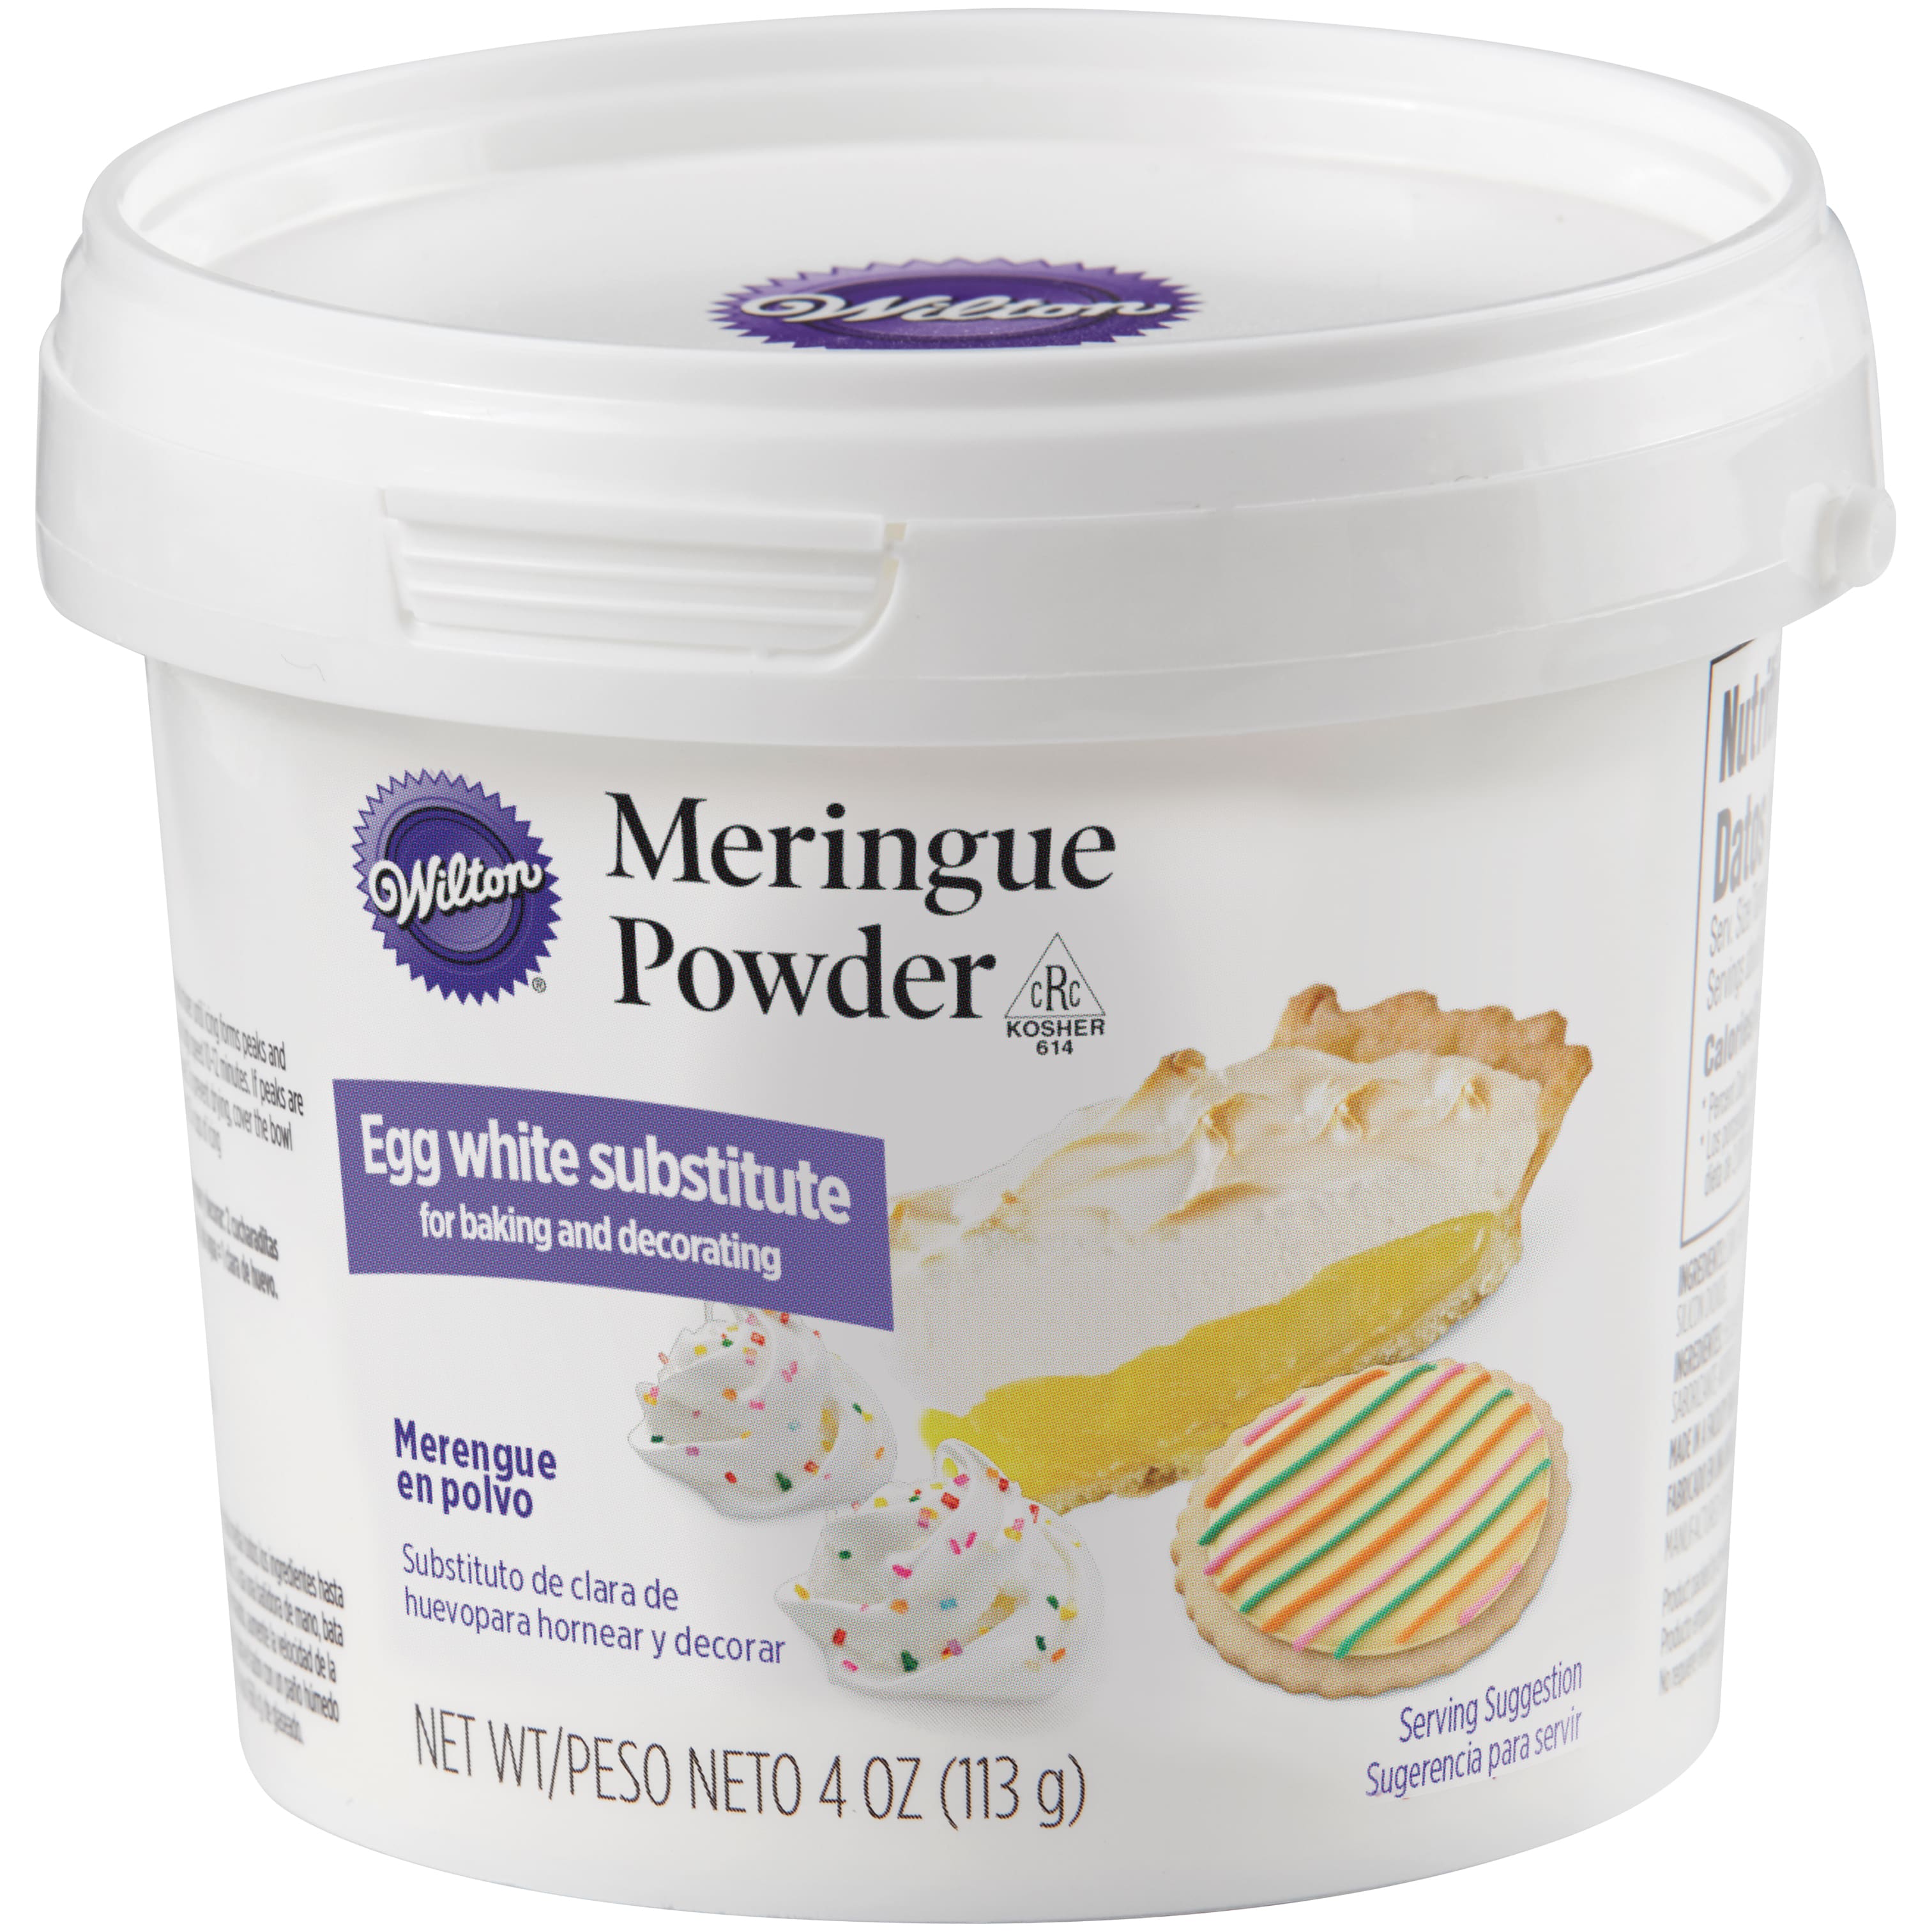 Shop for the Wilton® Meringue Powder at Michaels